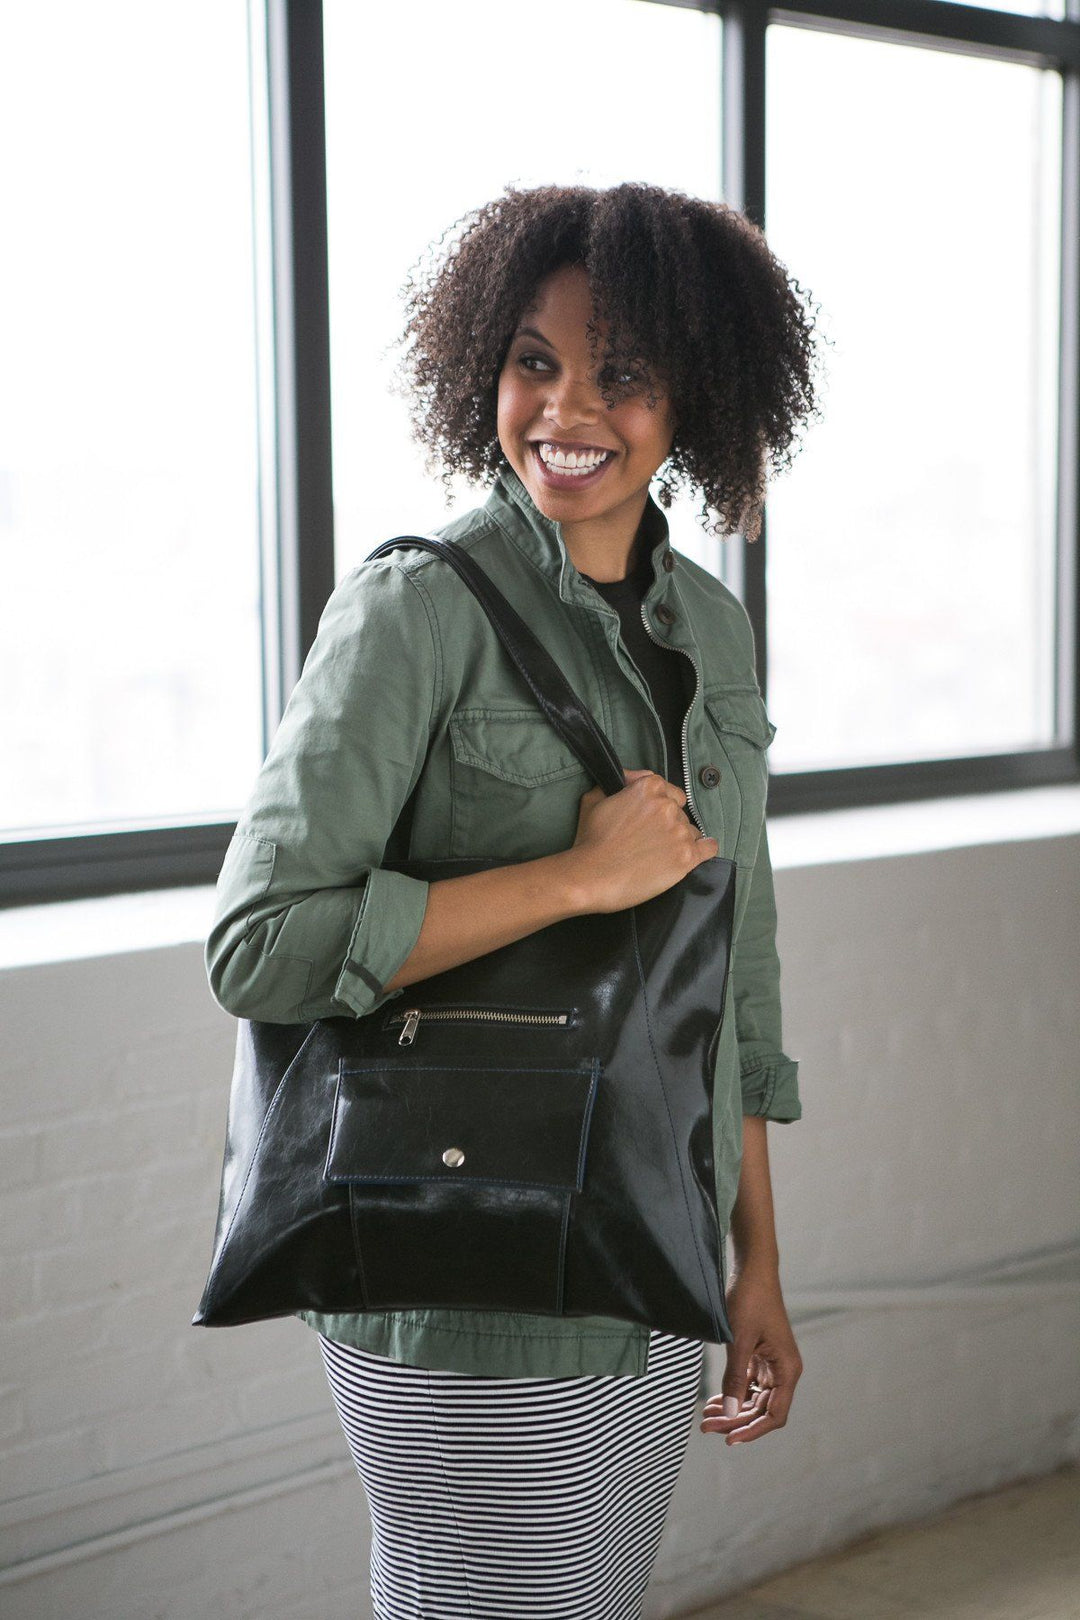 Cayla Top Handle Satchel Handbags Crocodile Bag Designer Purse Leather Tote Bags (Black)